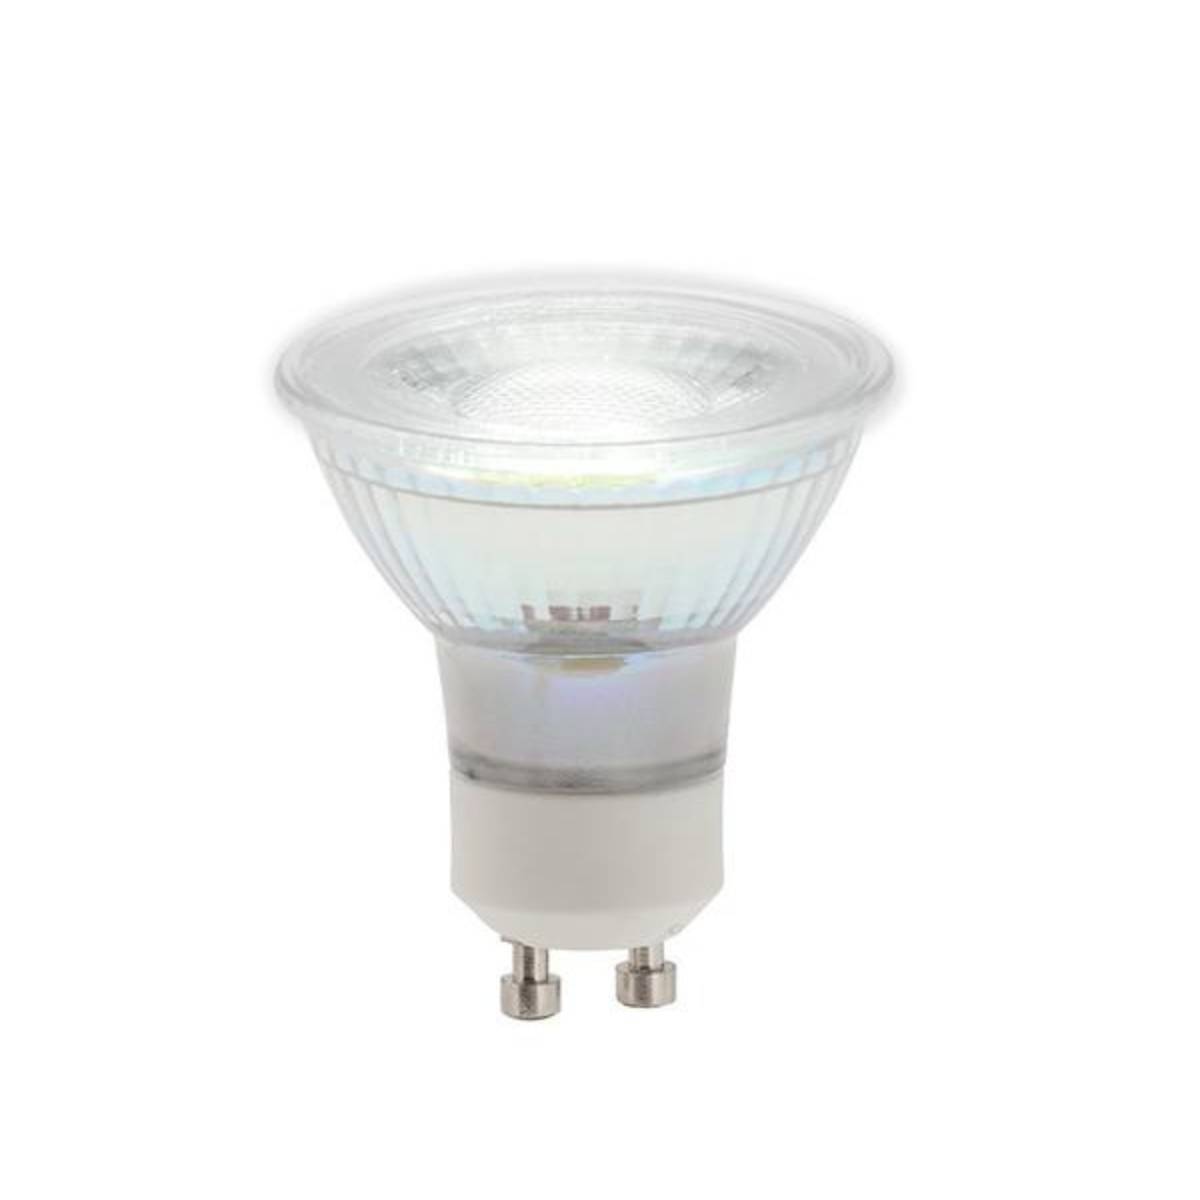 Forum Inlight INL-34151-4K GU10 Dimmable 4000k LED Bulb (12013)